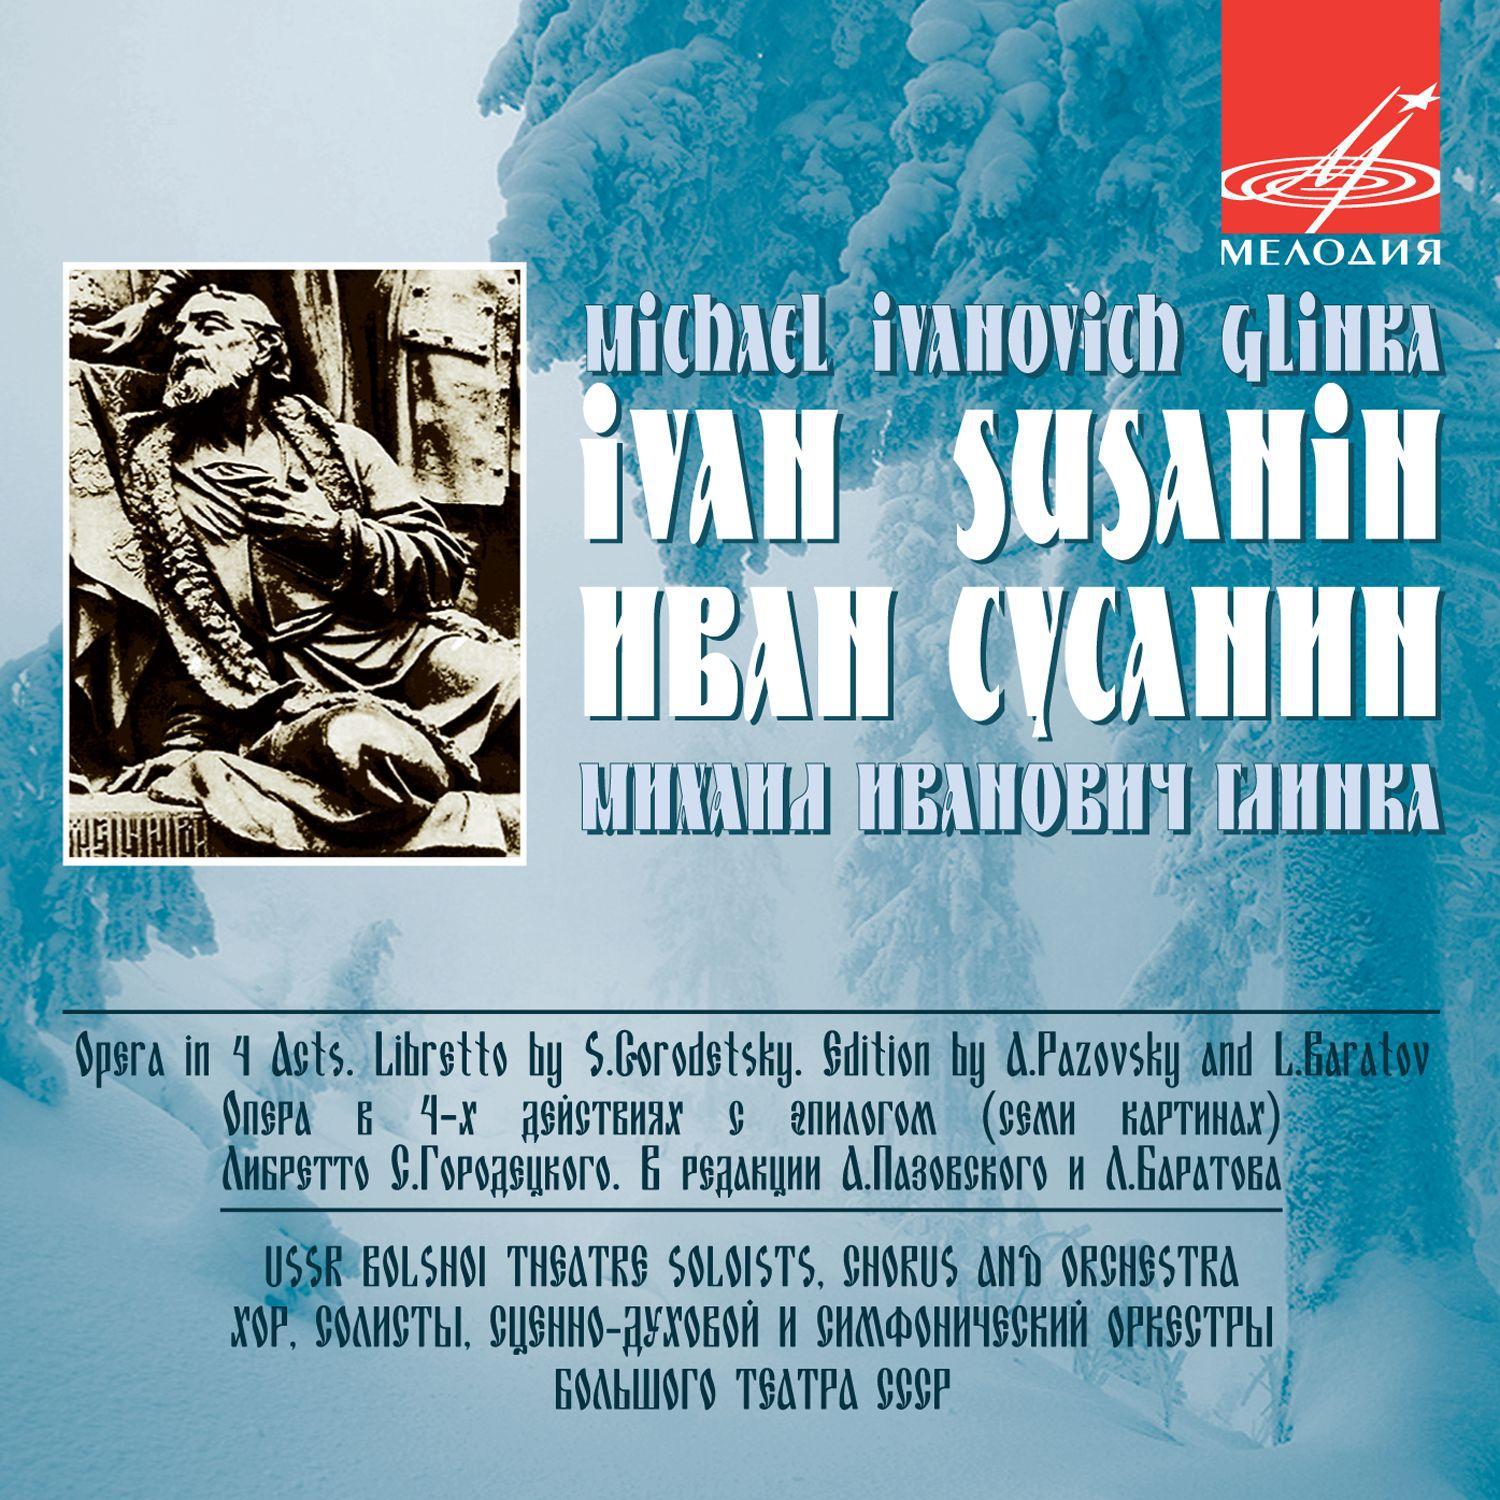 Mikhail Glinka - A Life for the Tsar (Ivan Susanin), Epilogue: Chorus 